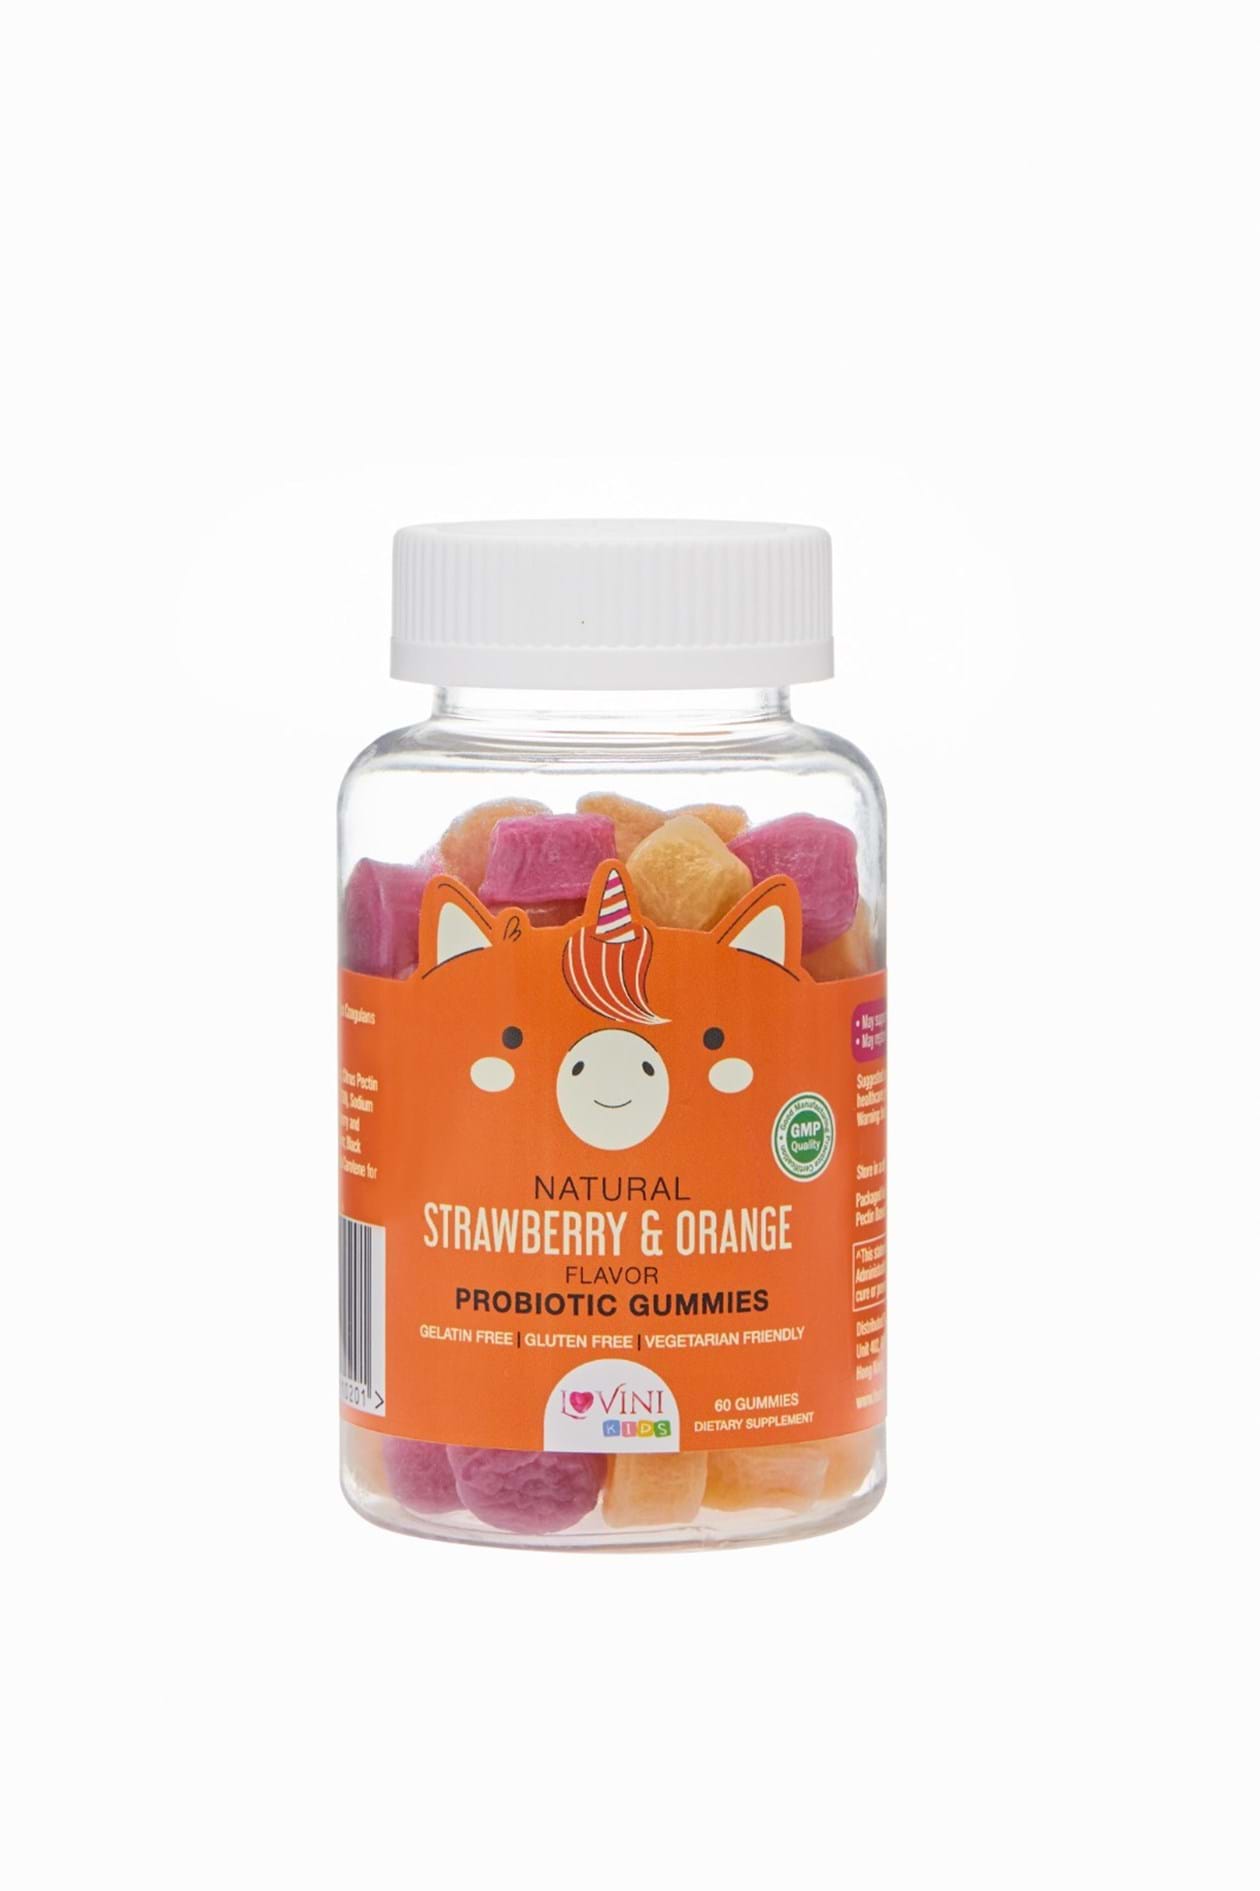 LoviniKids - Probiotic Gummies (60 Gummies) (Delivery Product)